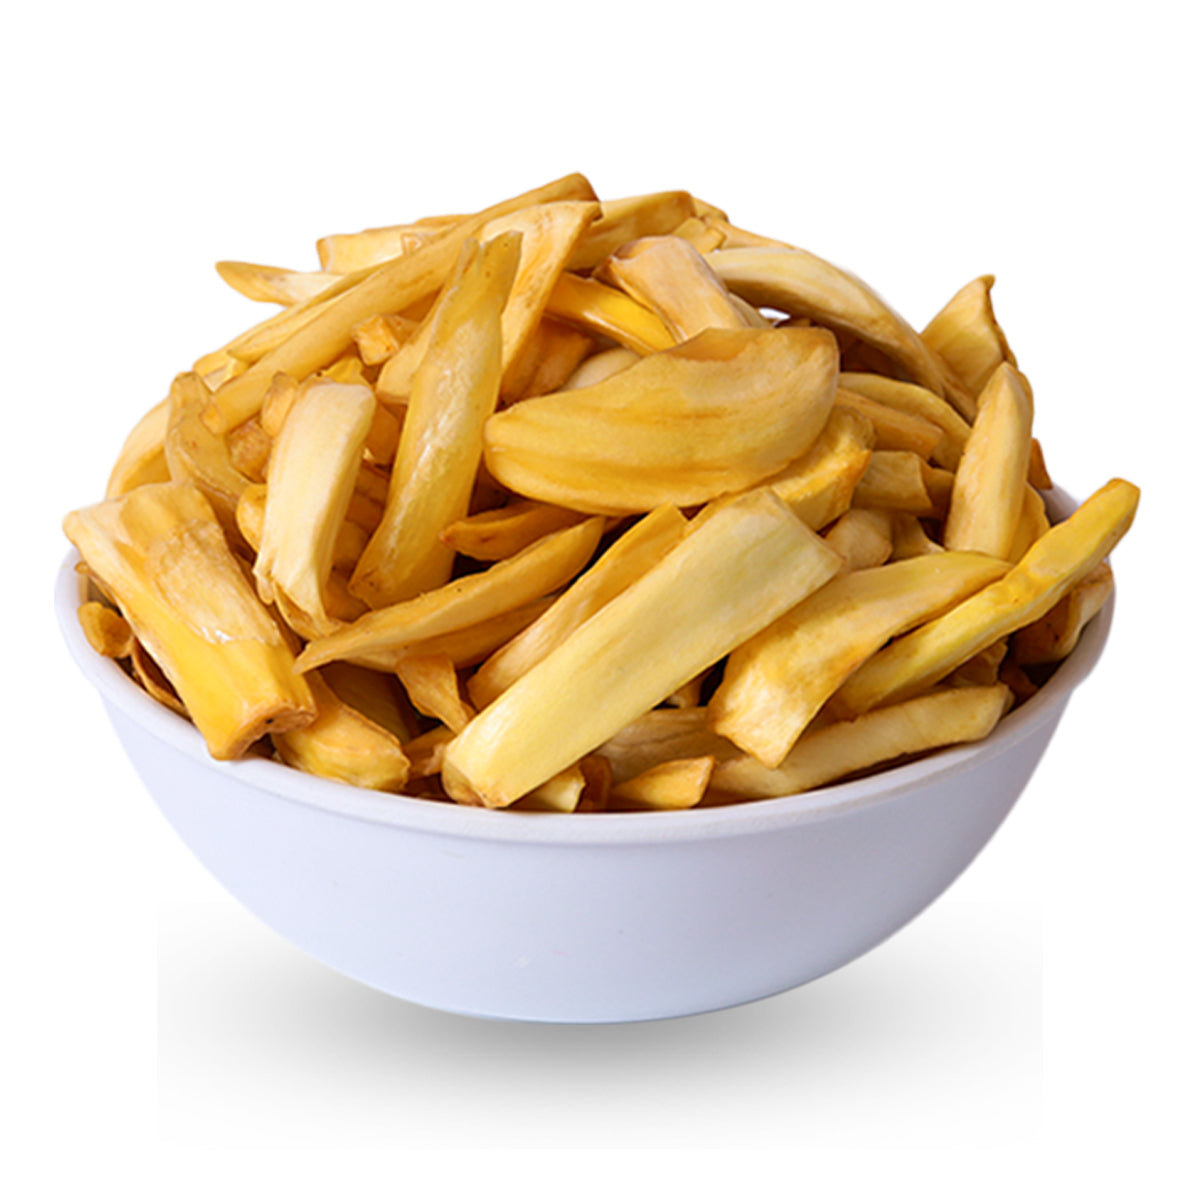 Kerala Chips Combo - Banana Chips (250g), Jackfruit Chips (250g), Masala Banana Chips (250g), Tapioca Chips (250g) - 1kg